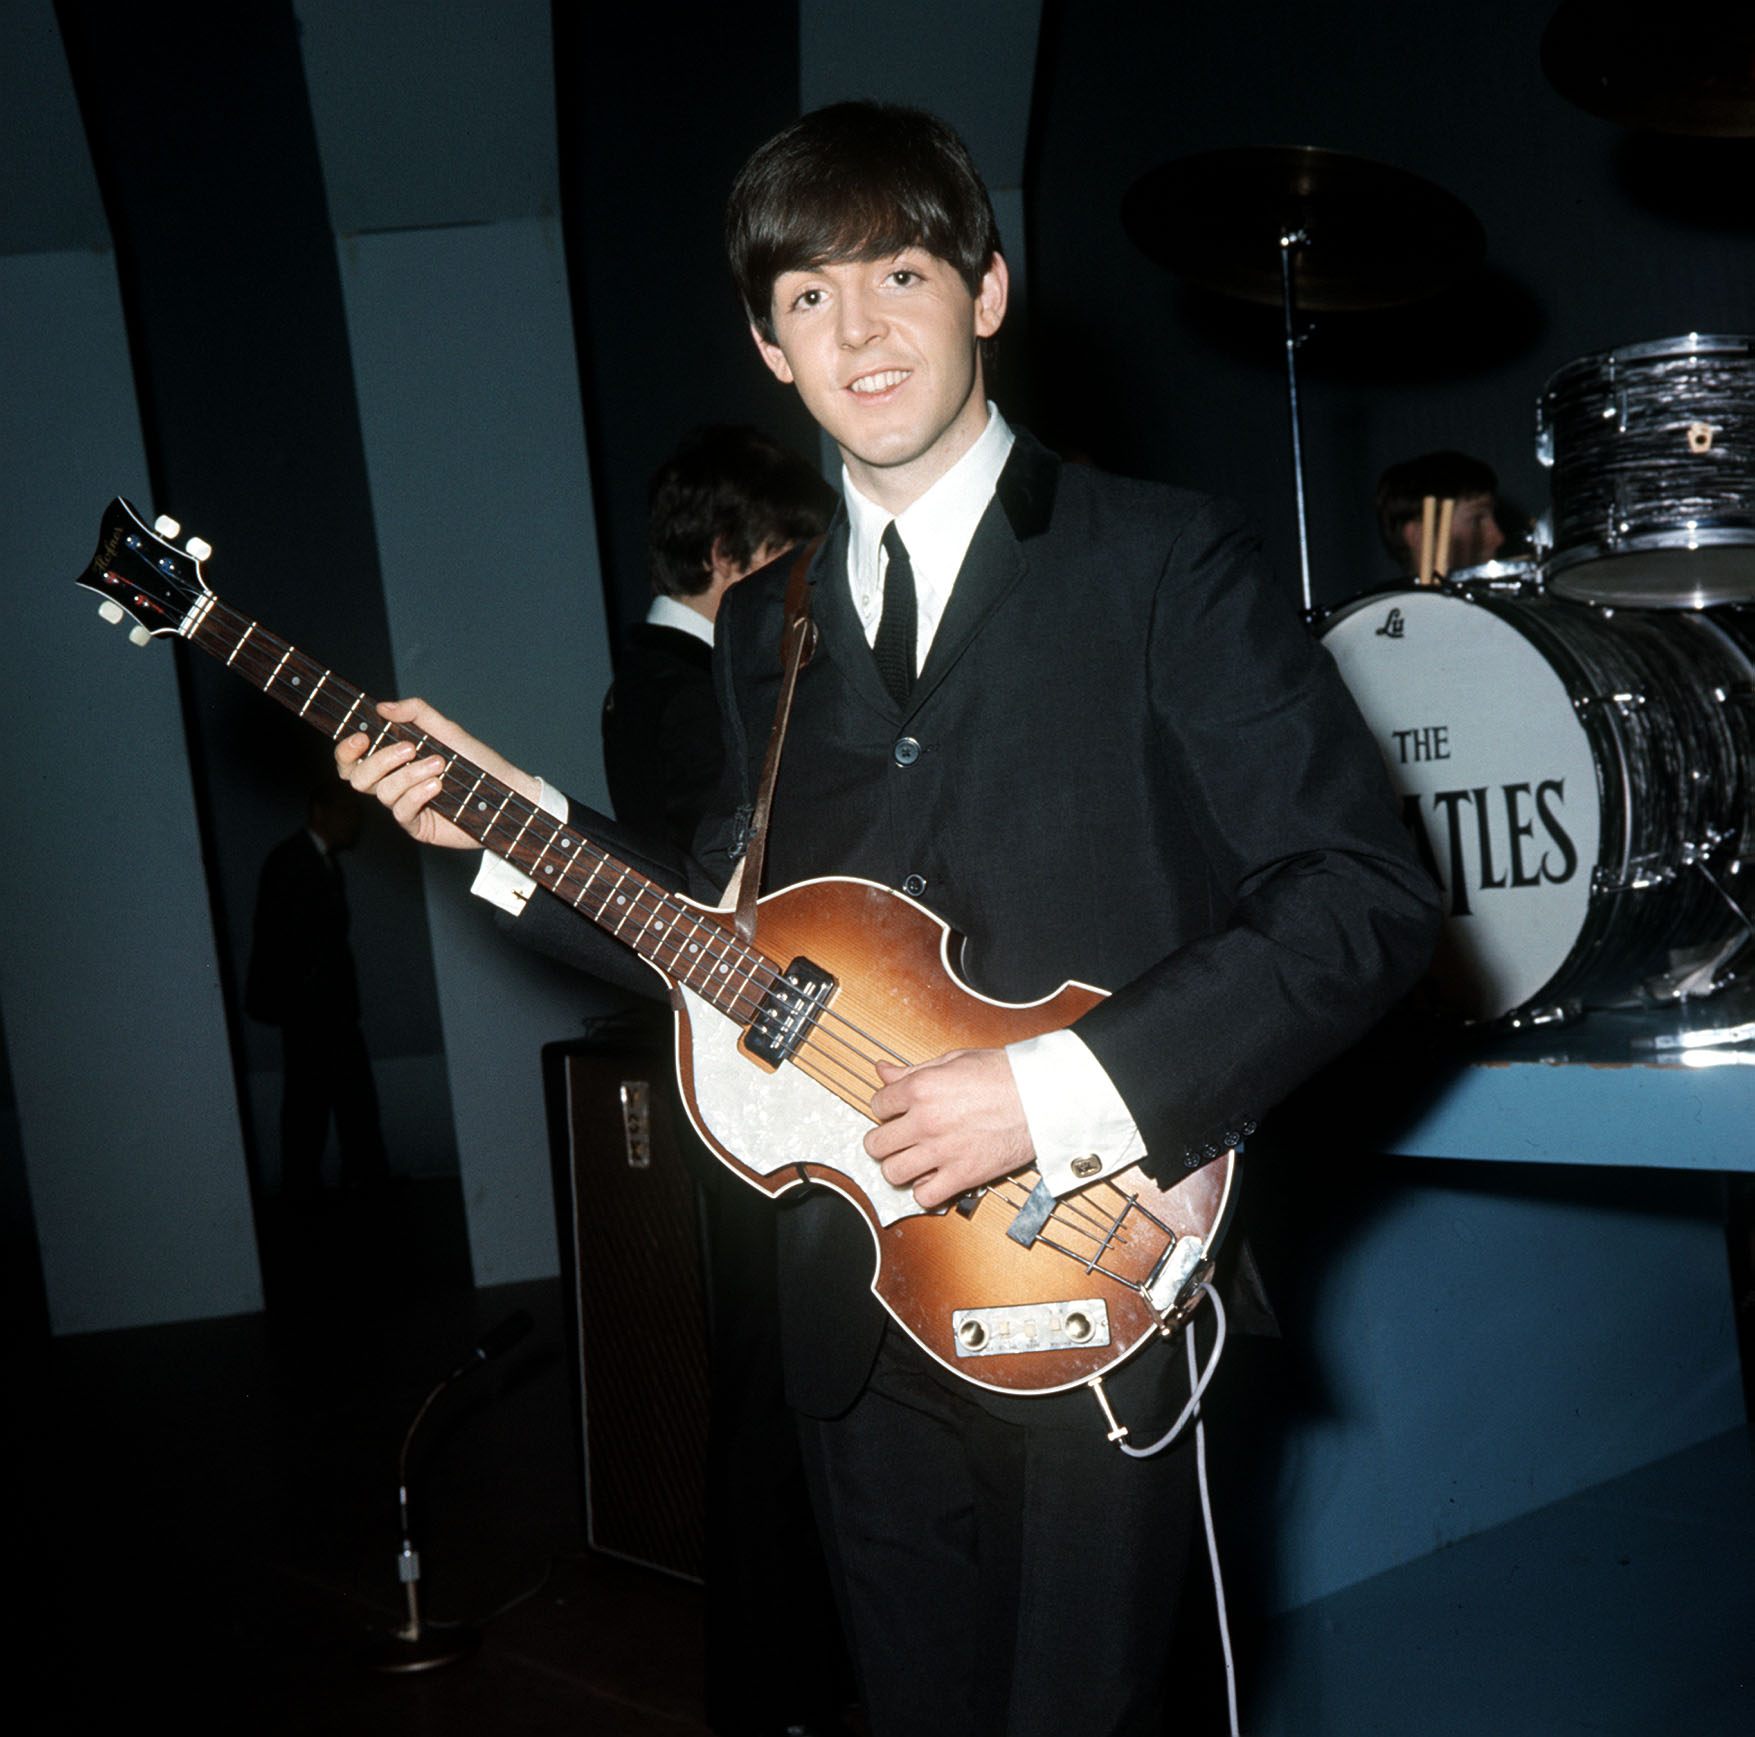 The Beatles' Paul McCartney with a guitar